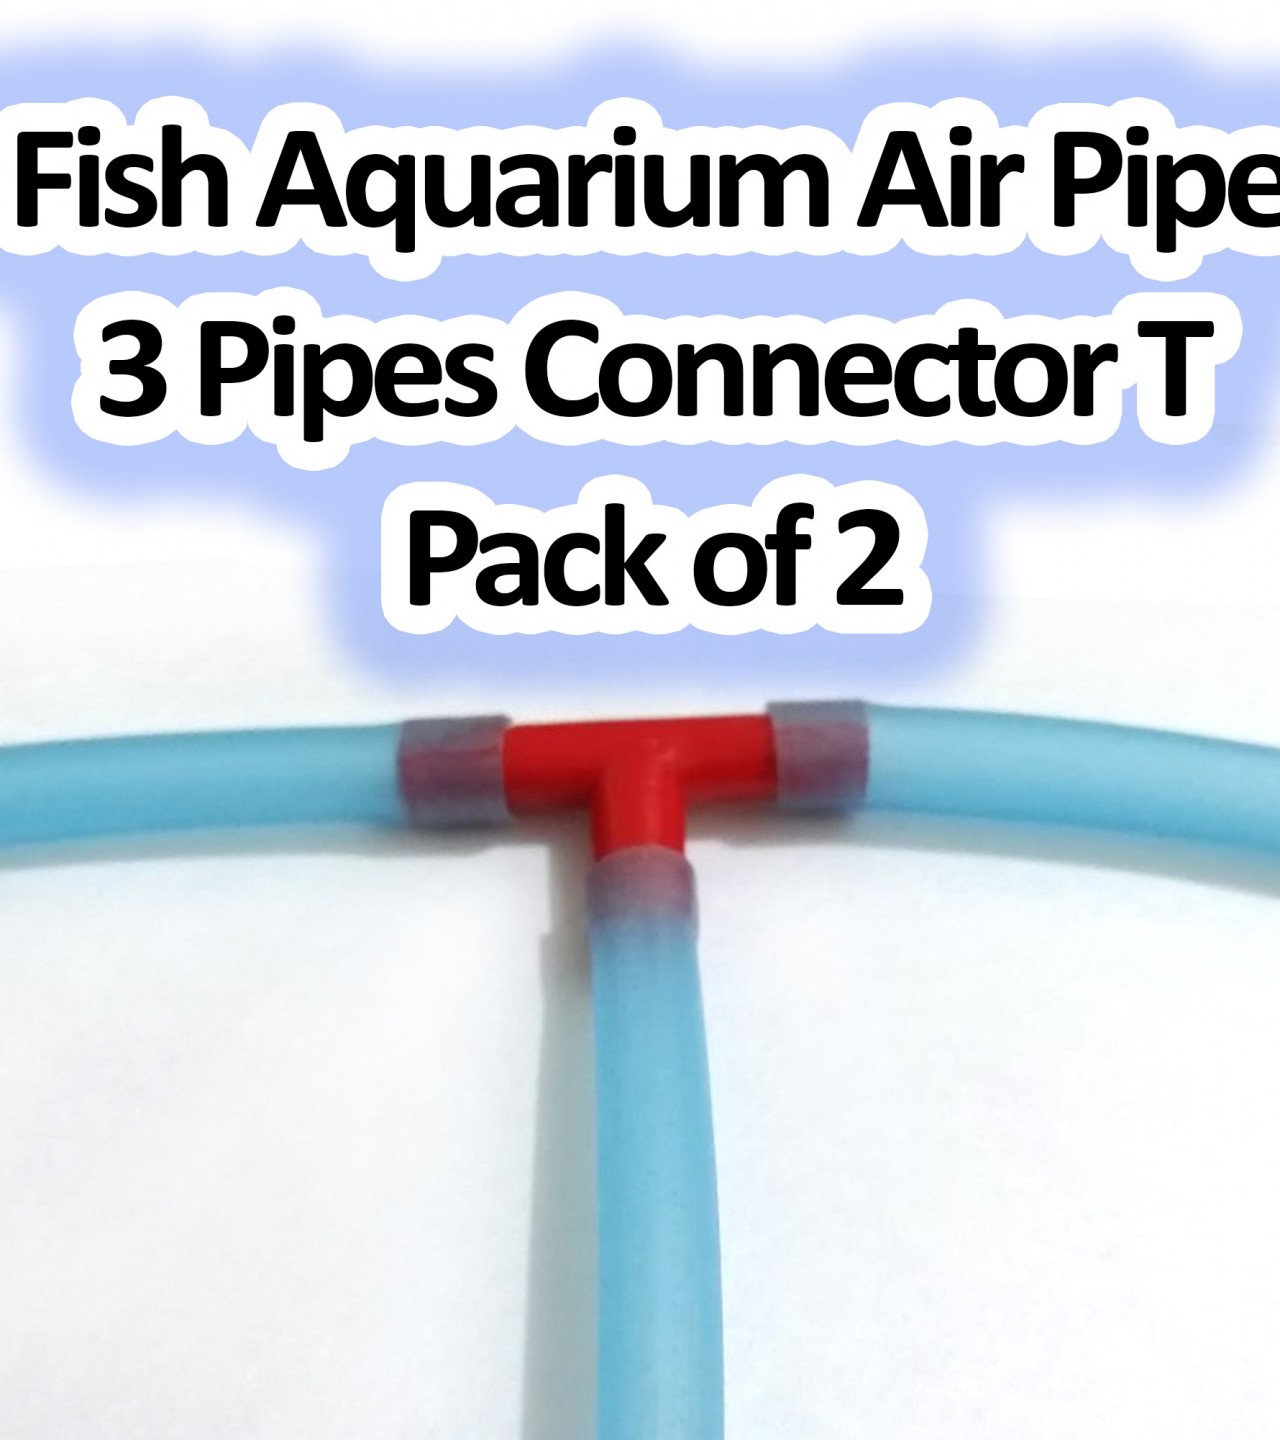 Fish Aquarium Air Pipe 3 Way Connector T - Pack of 2